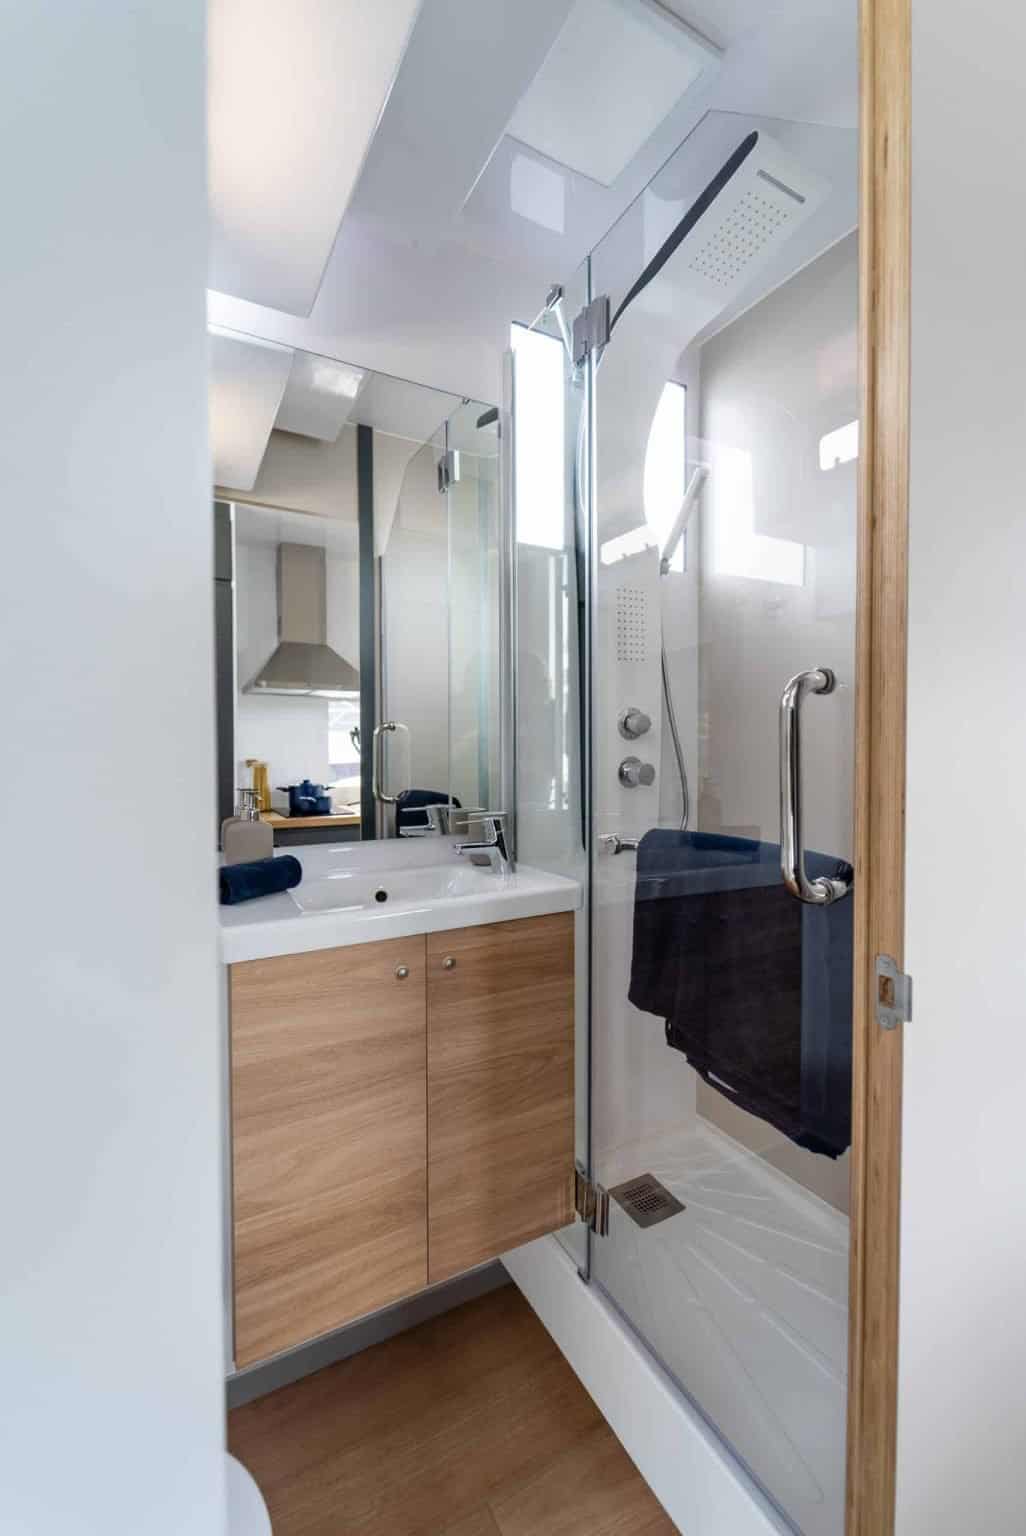 NH_interior_bathroom-scaled.jpg